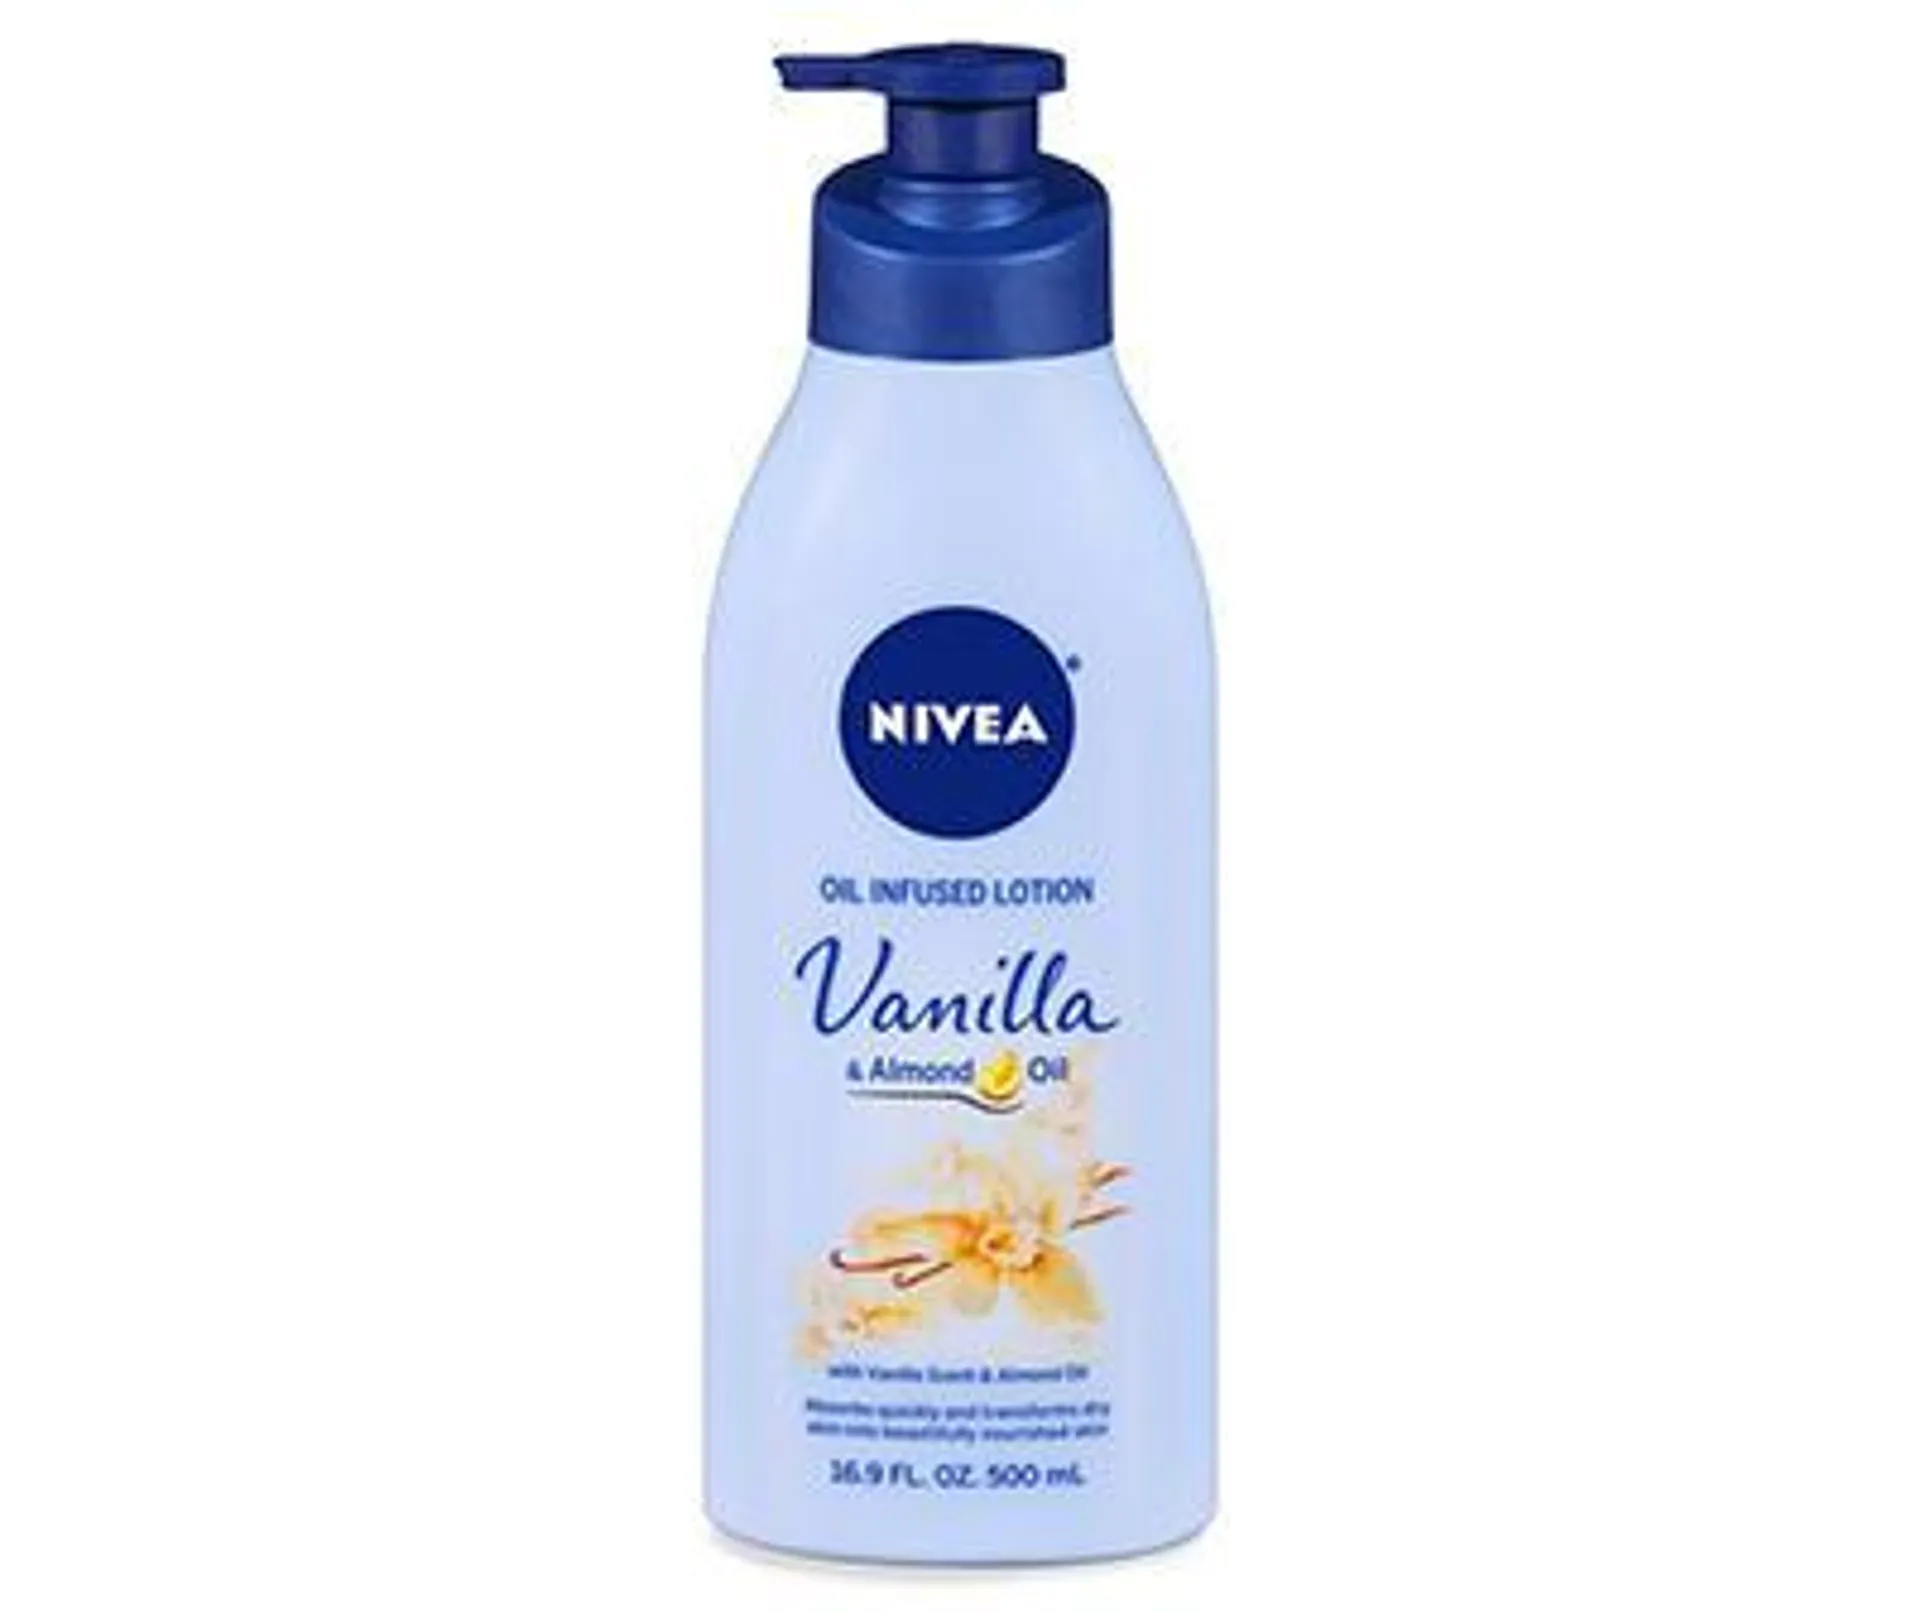 NIVEA Vanilla & Almond Oil Infused Lotion 16.9 fl. oz. Pump Bottle